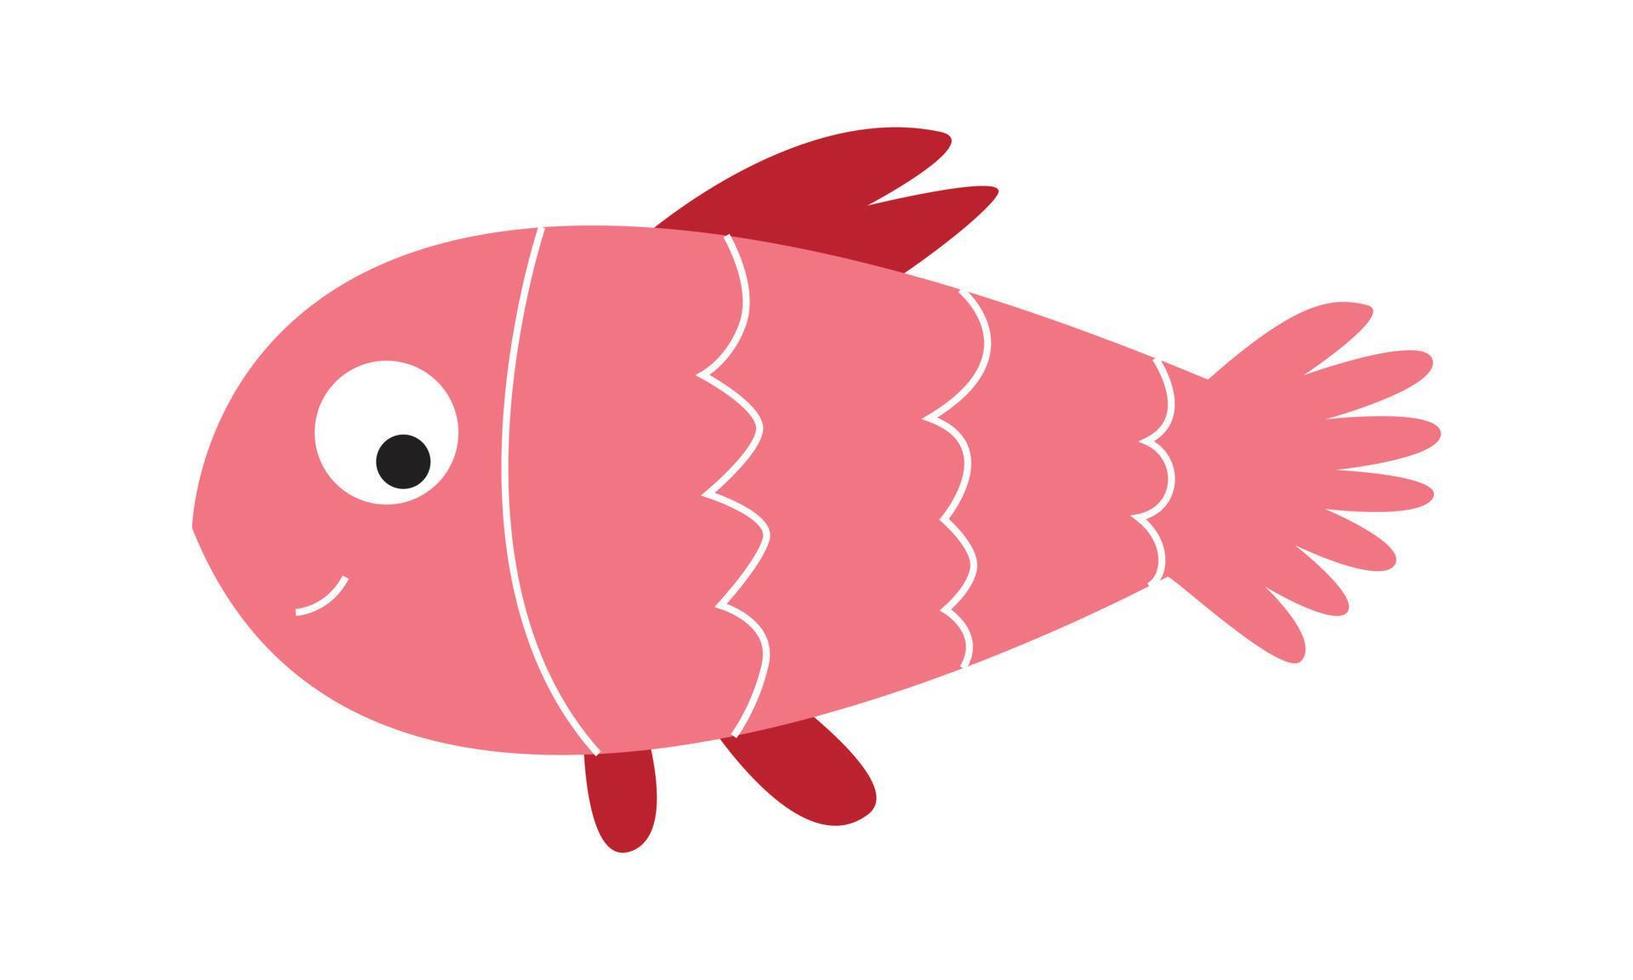 kreative Vektorillustration eines rosa Fisches vektor